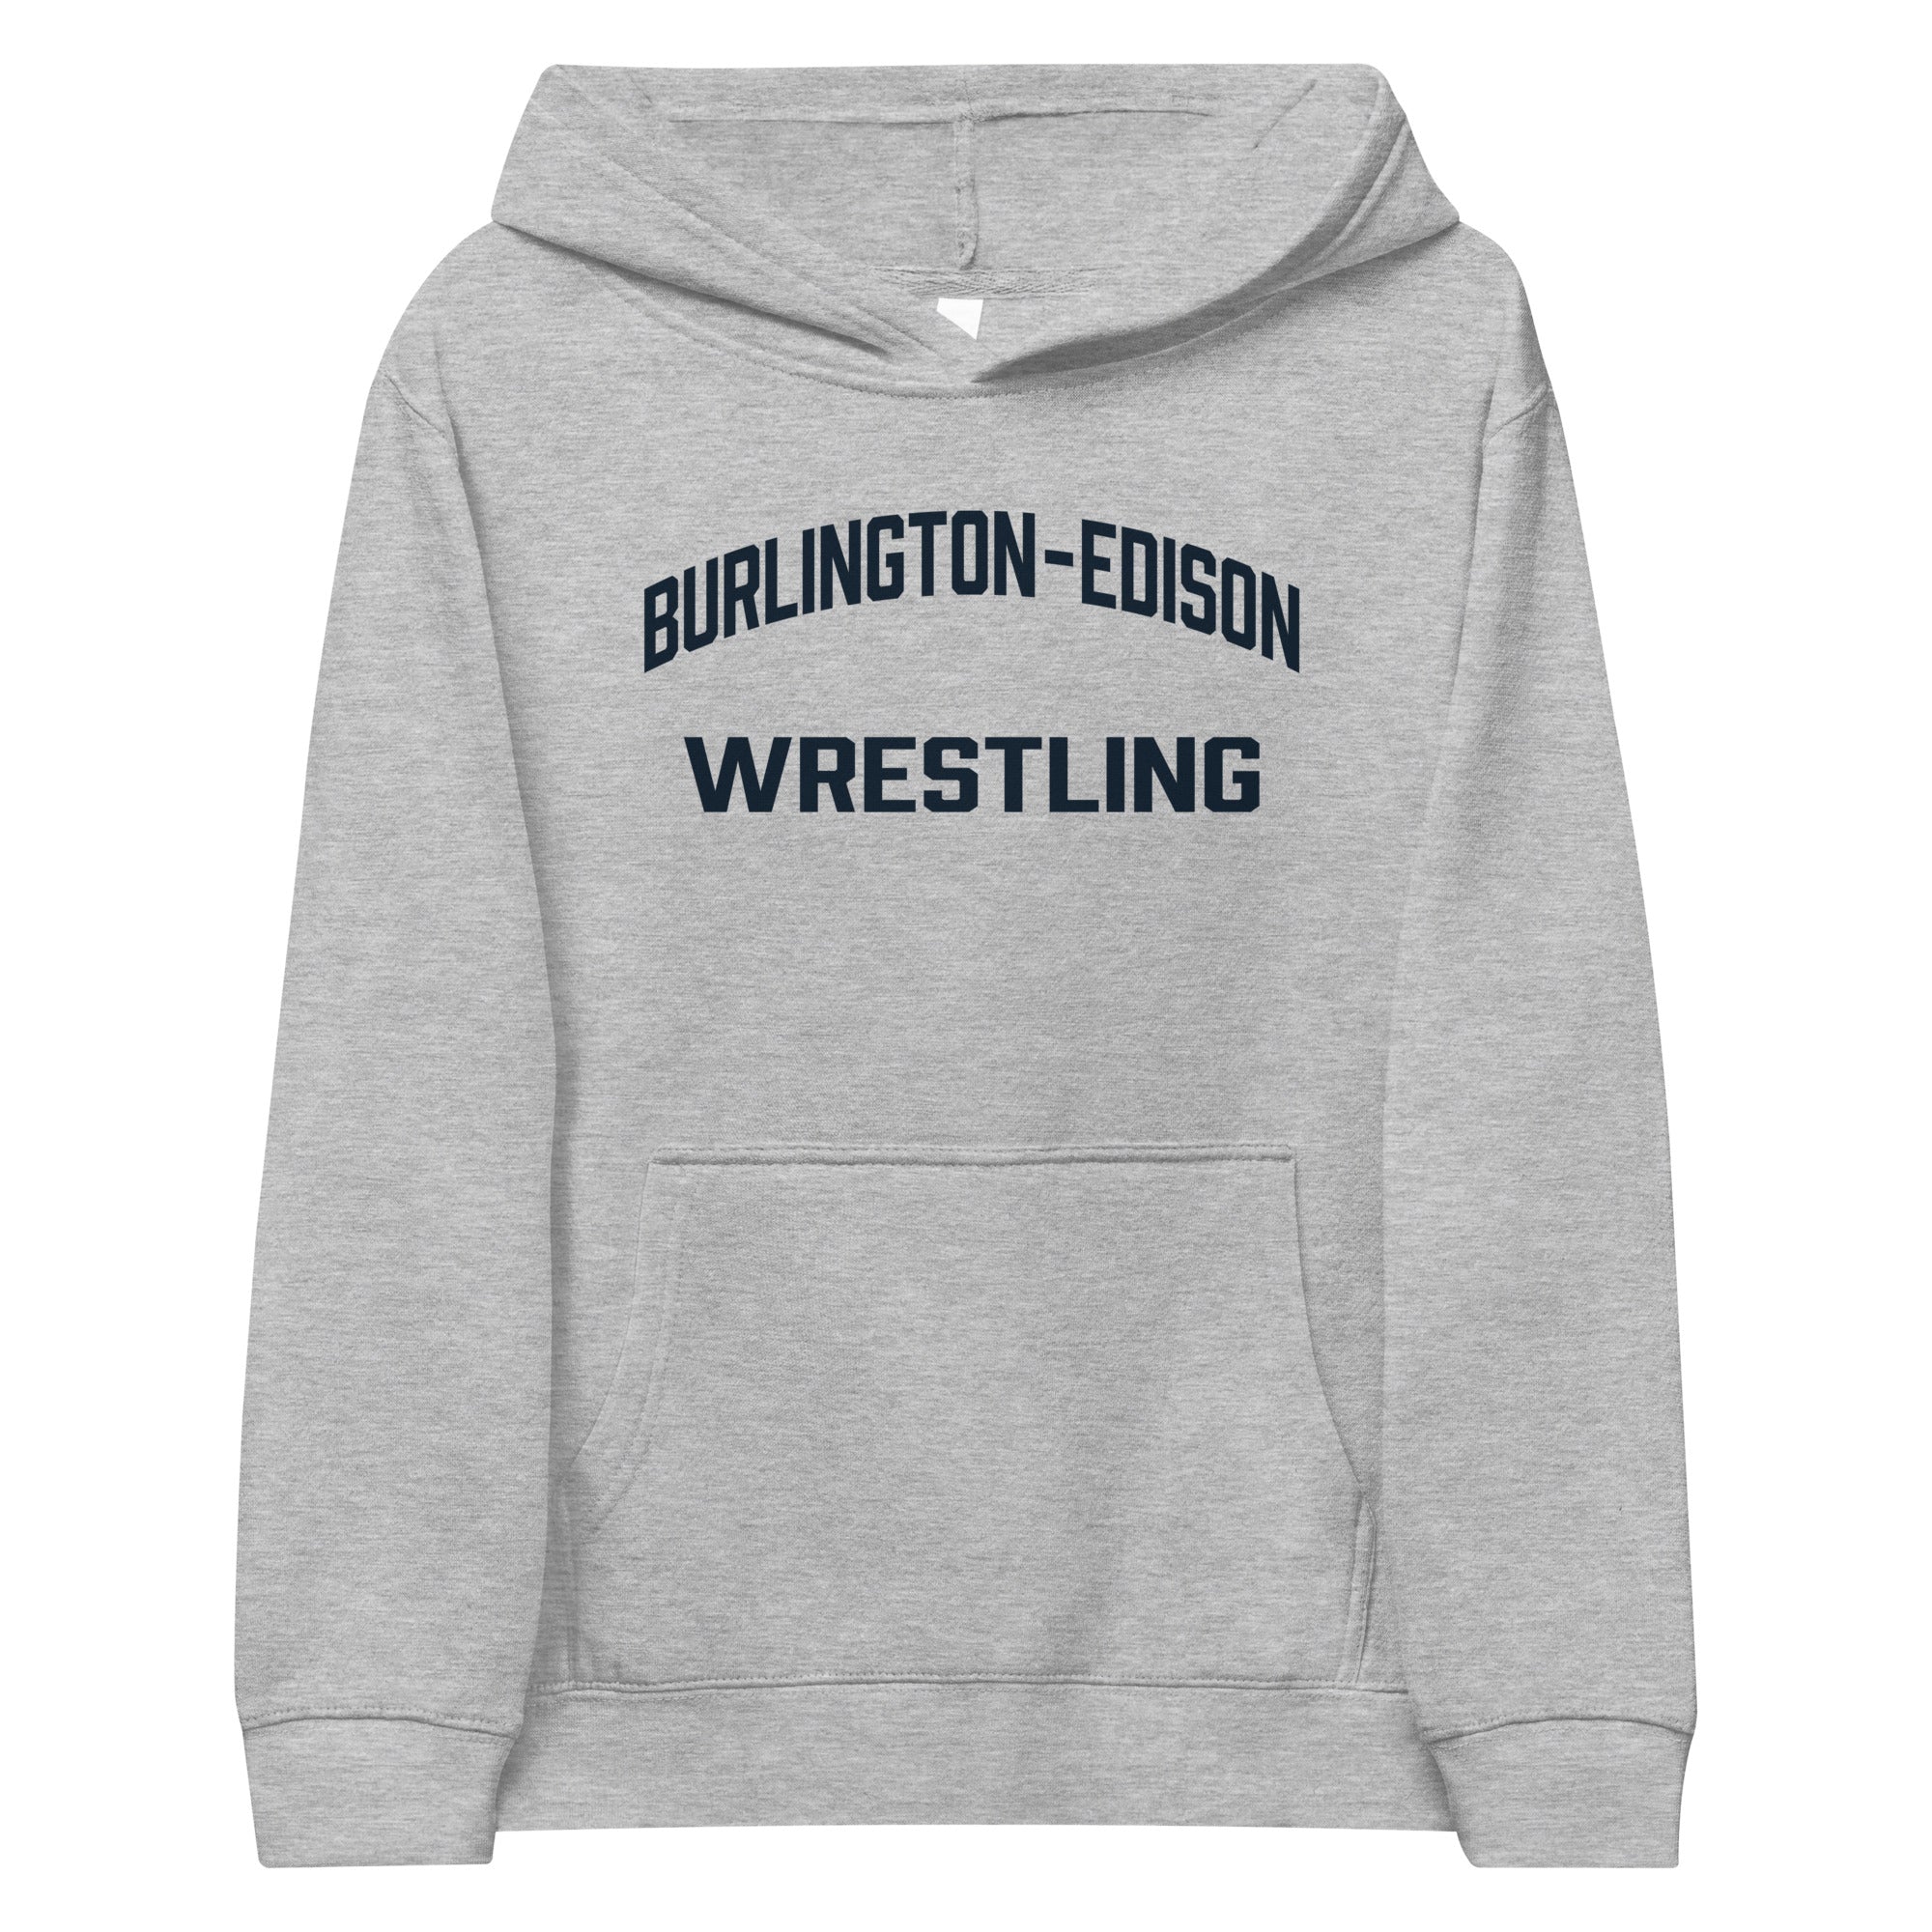 Burlington-Edison HS Wrestling Burling-Edison Kids Fleece Hoodie